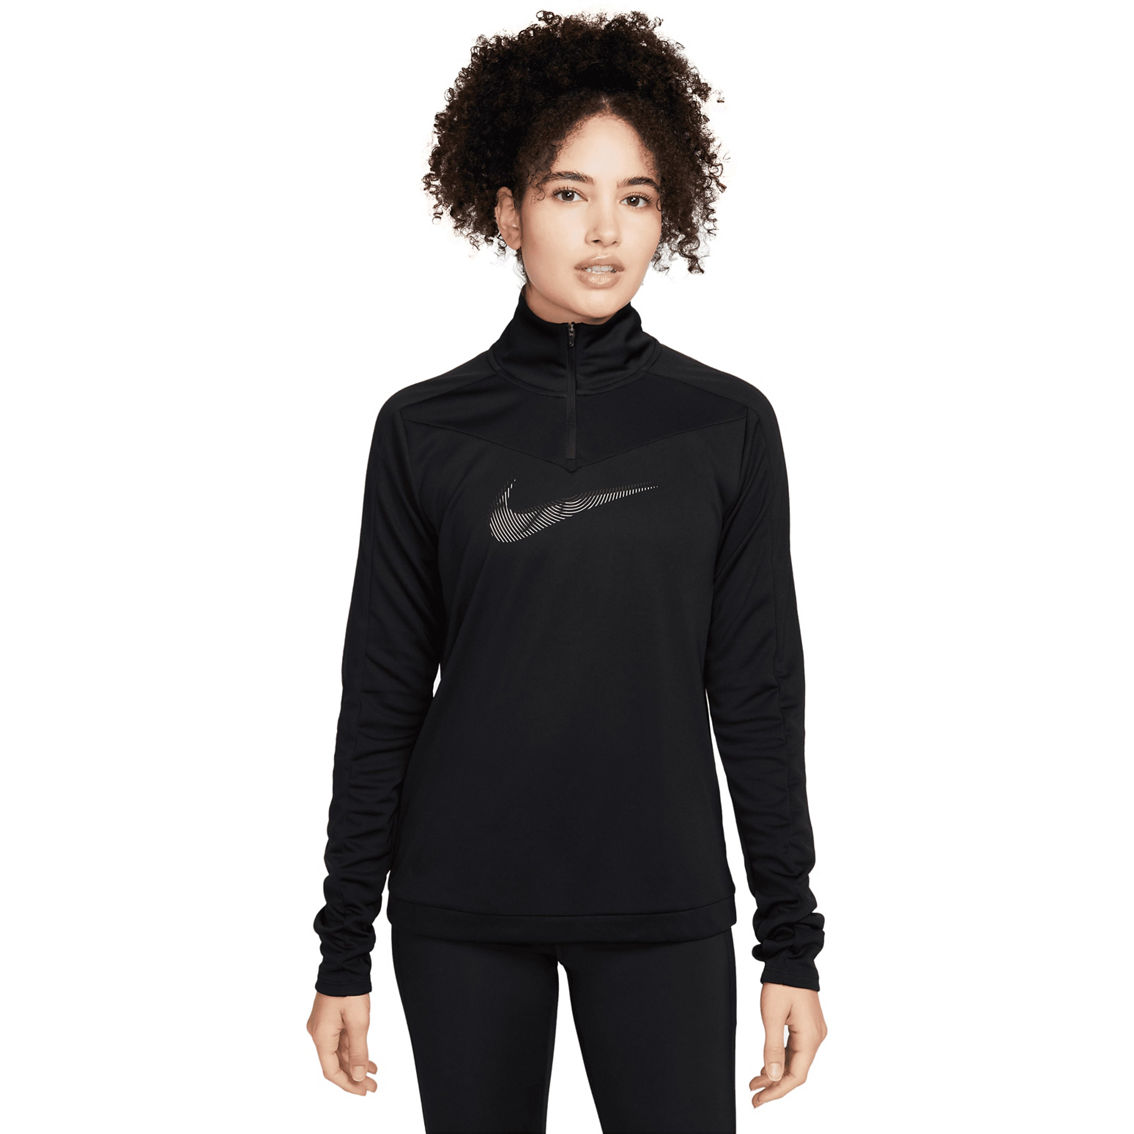 Nike Dri Fit Swoosh Quarter Zip Running Top | Tops | Clothing ...